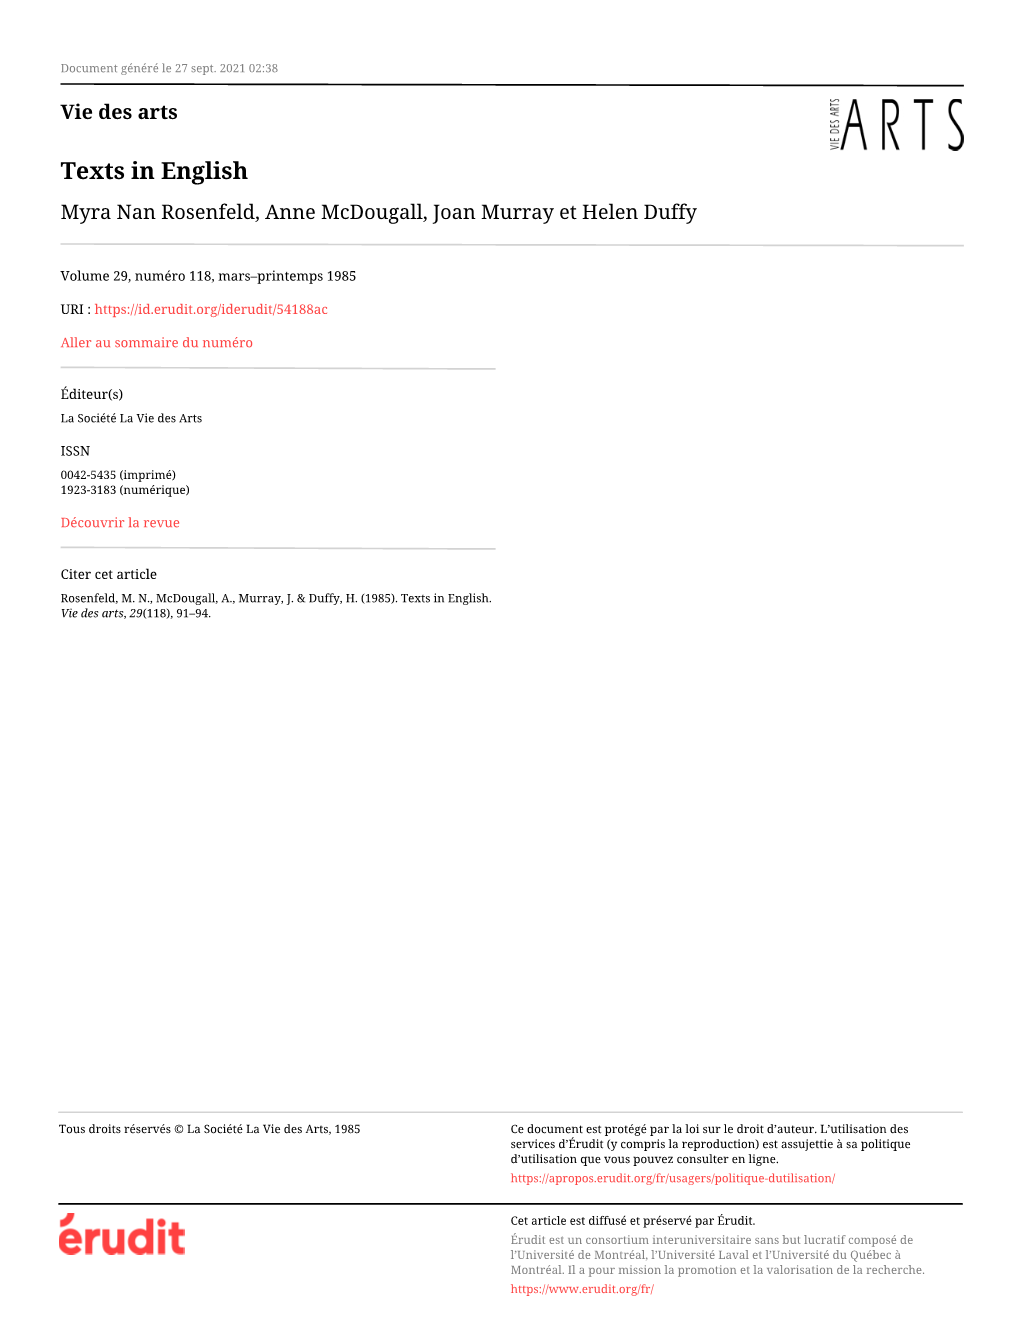 Texts in English Myra Nan Rosenfeld, Anne Mcdougall, Joan Murray Et Helen Duffy